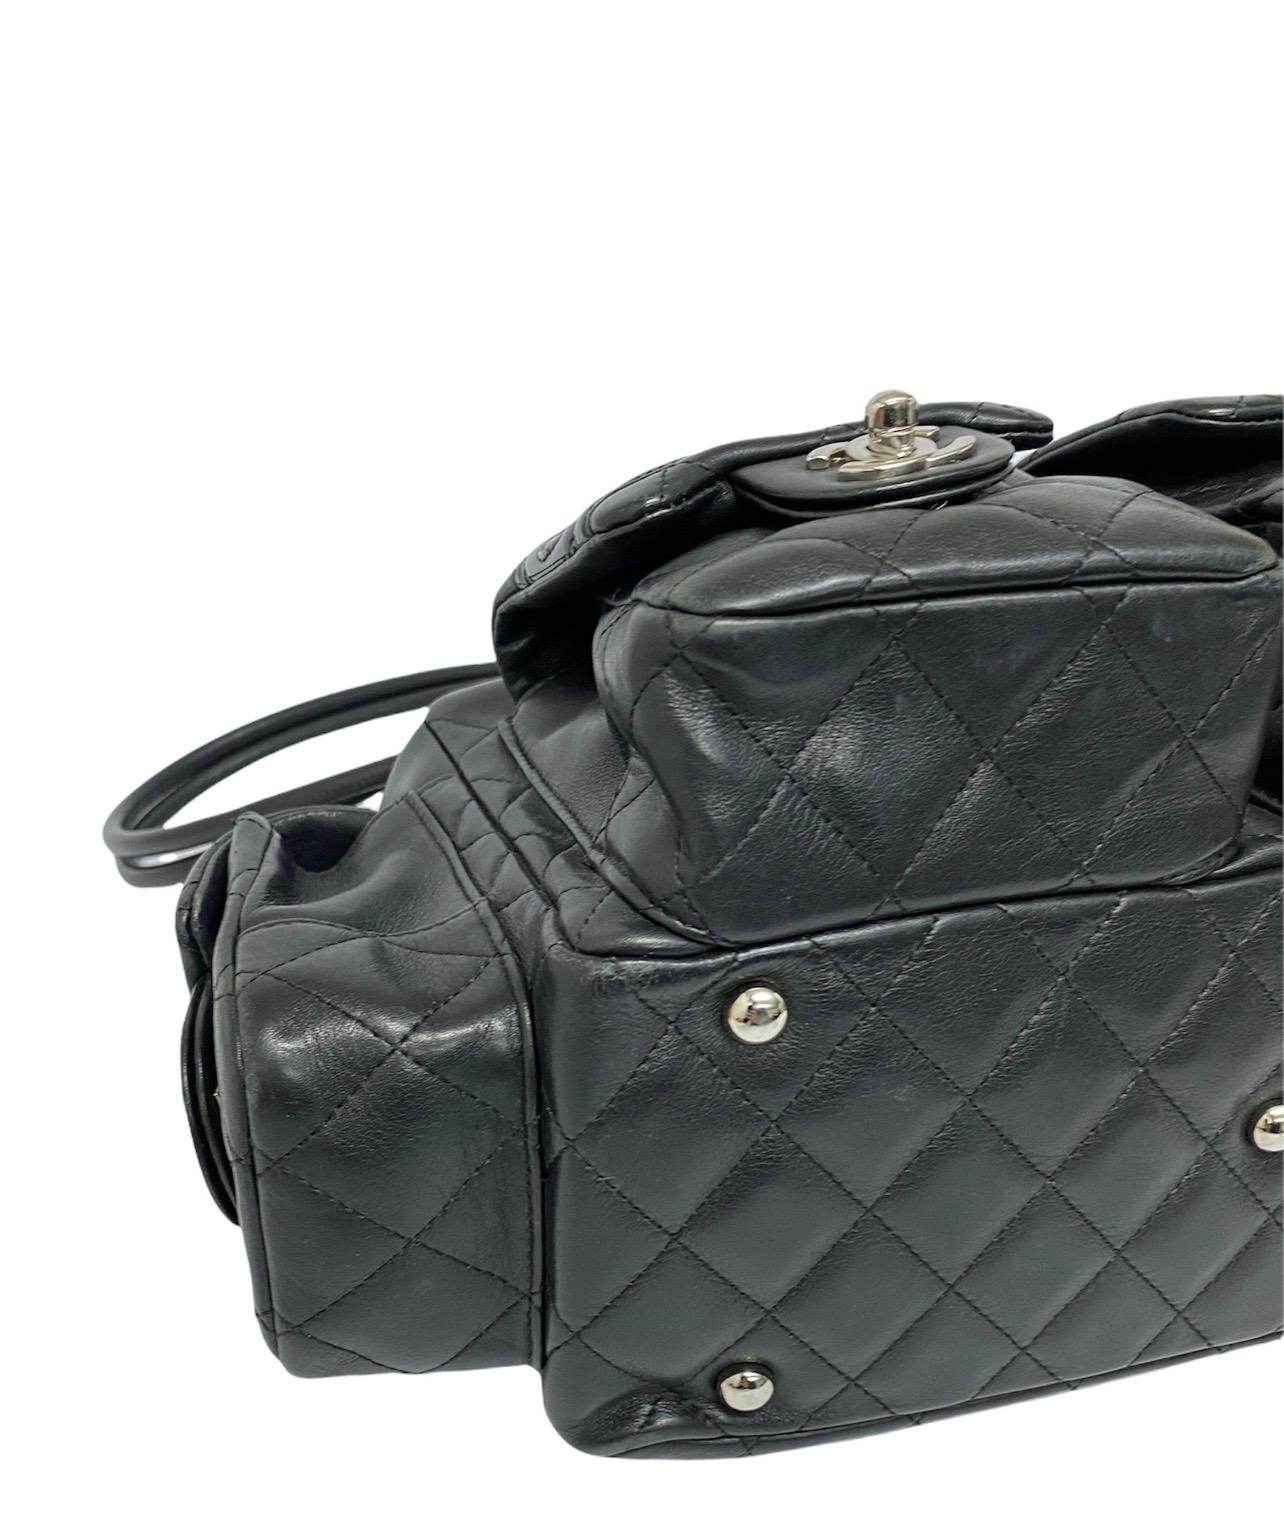 Women's Chanel Black Leather Cambon Bag